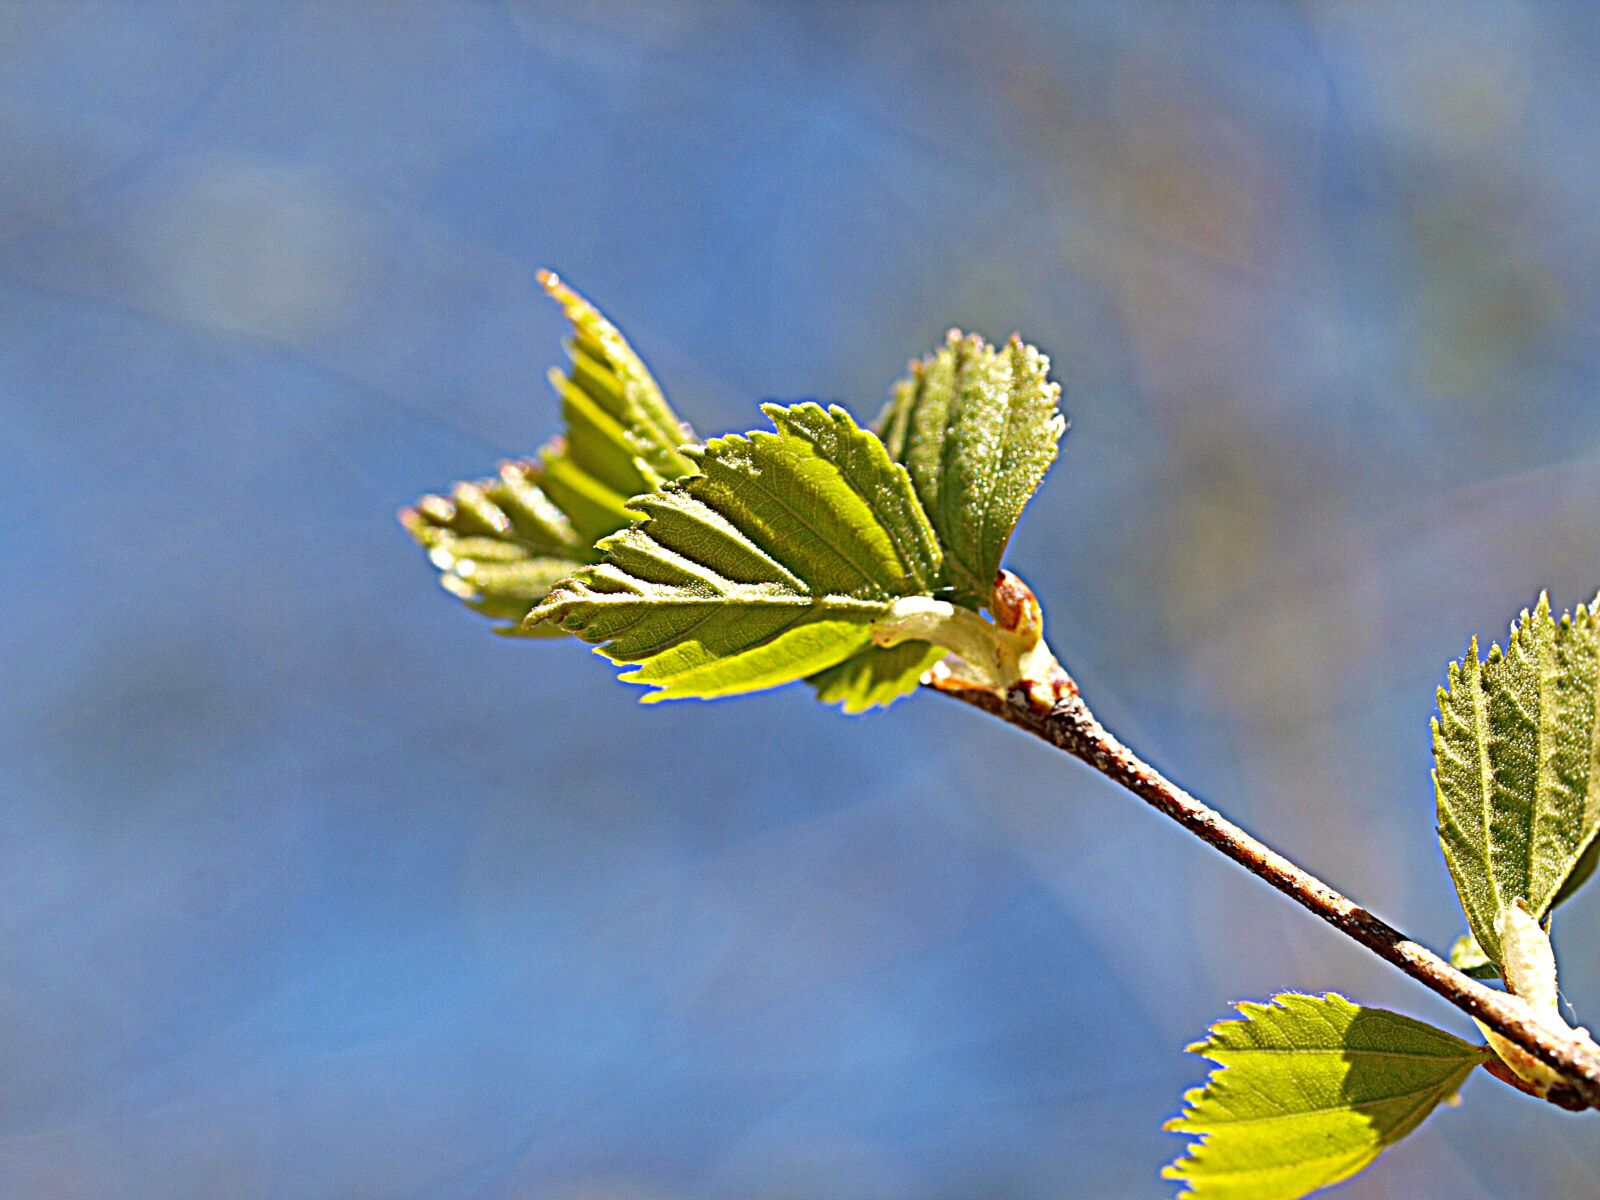 Olympus E-3 sample photo. Birch, leaf, spring photography